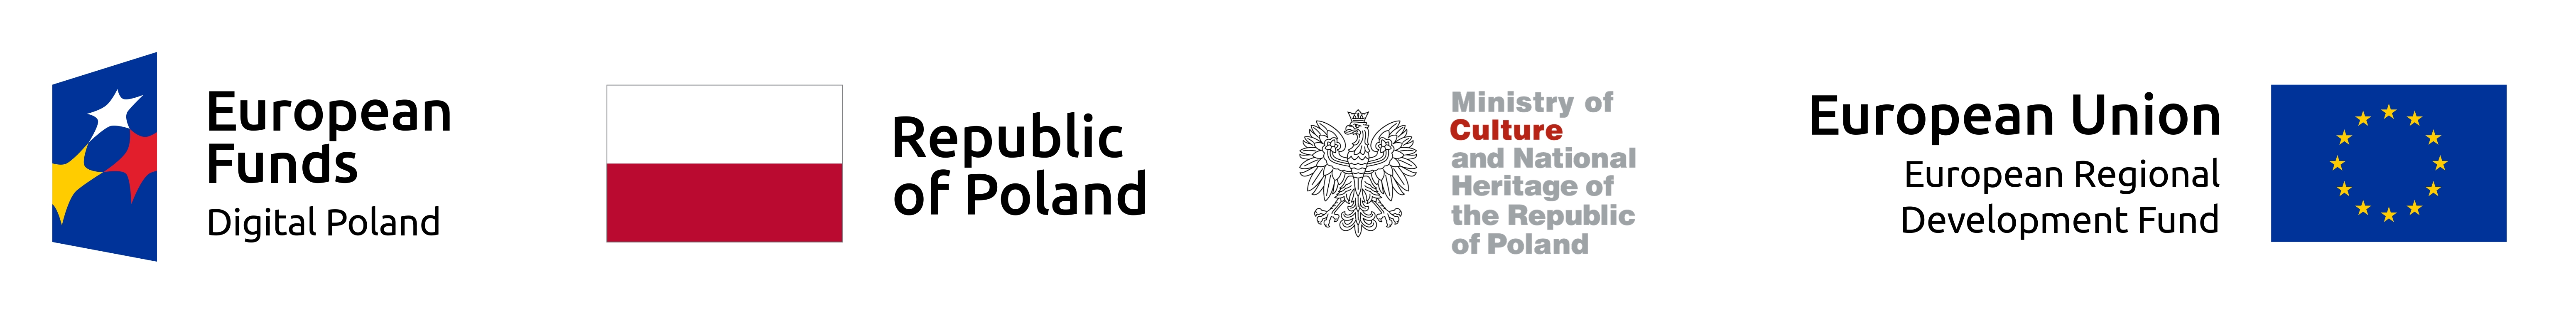 logo of the EU funds, logo of the Republic of Poland, logo of the Polish Ministry of Culture, logo of the EU Regional DevelopmentFunds